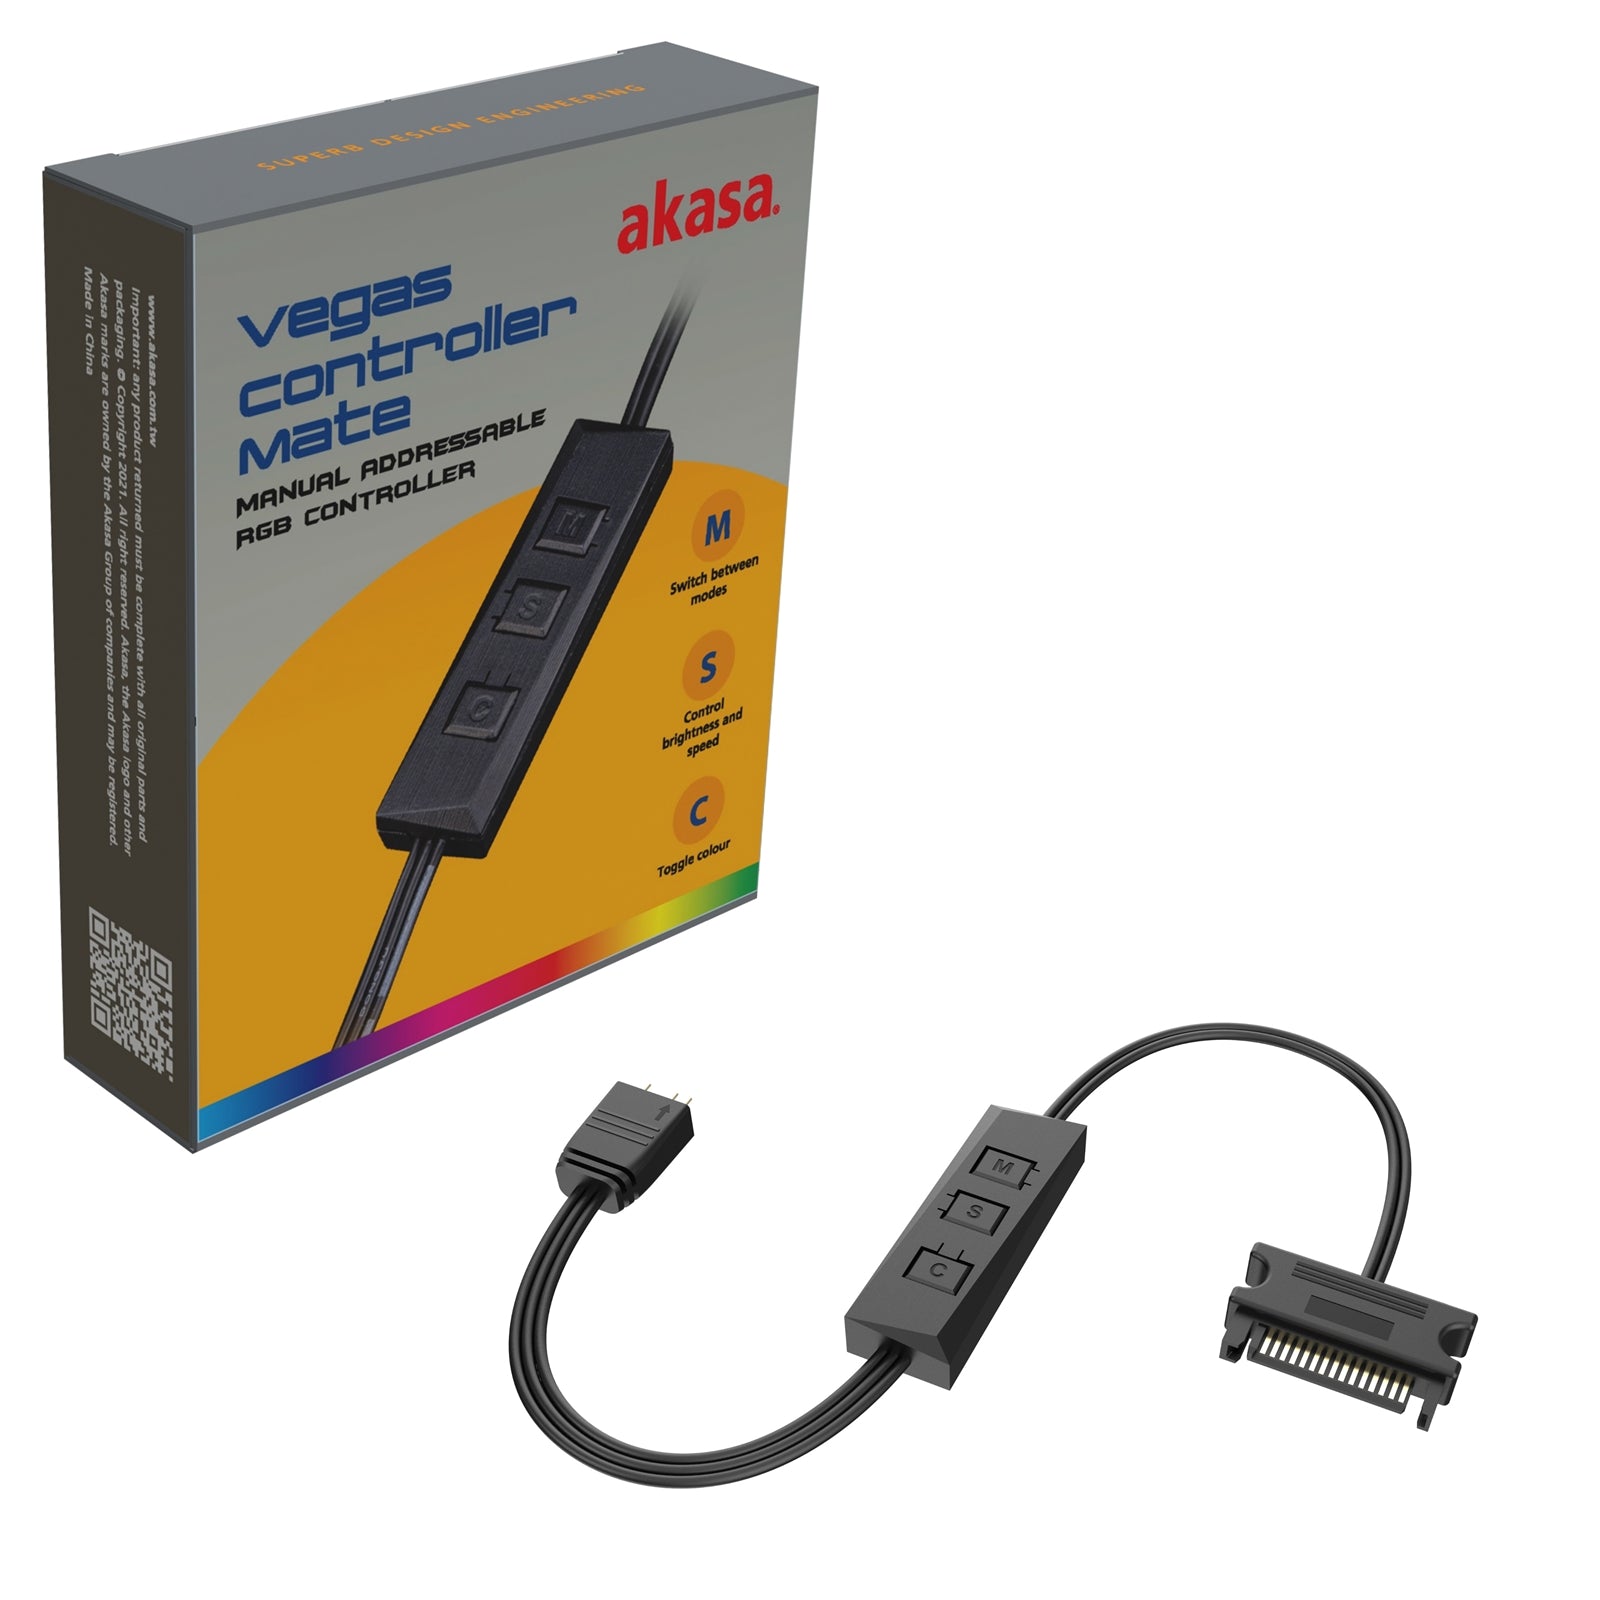 Photos - Cable (video, audio, USB) Akasa Vegas Controller Mate Addressable RGB Controller Cable, SATA 1 